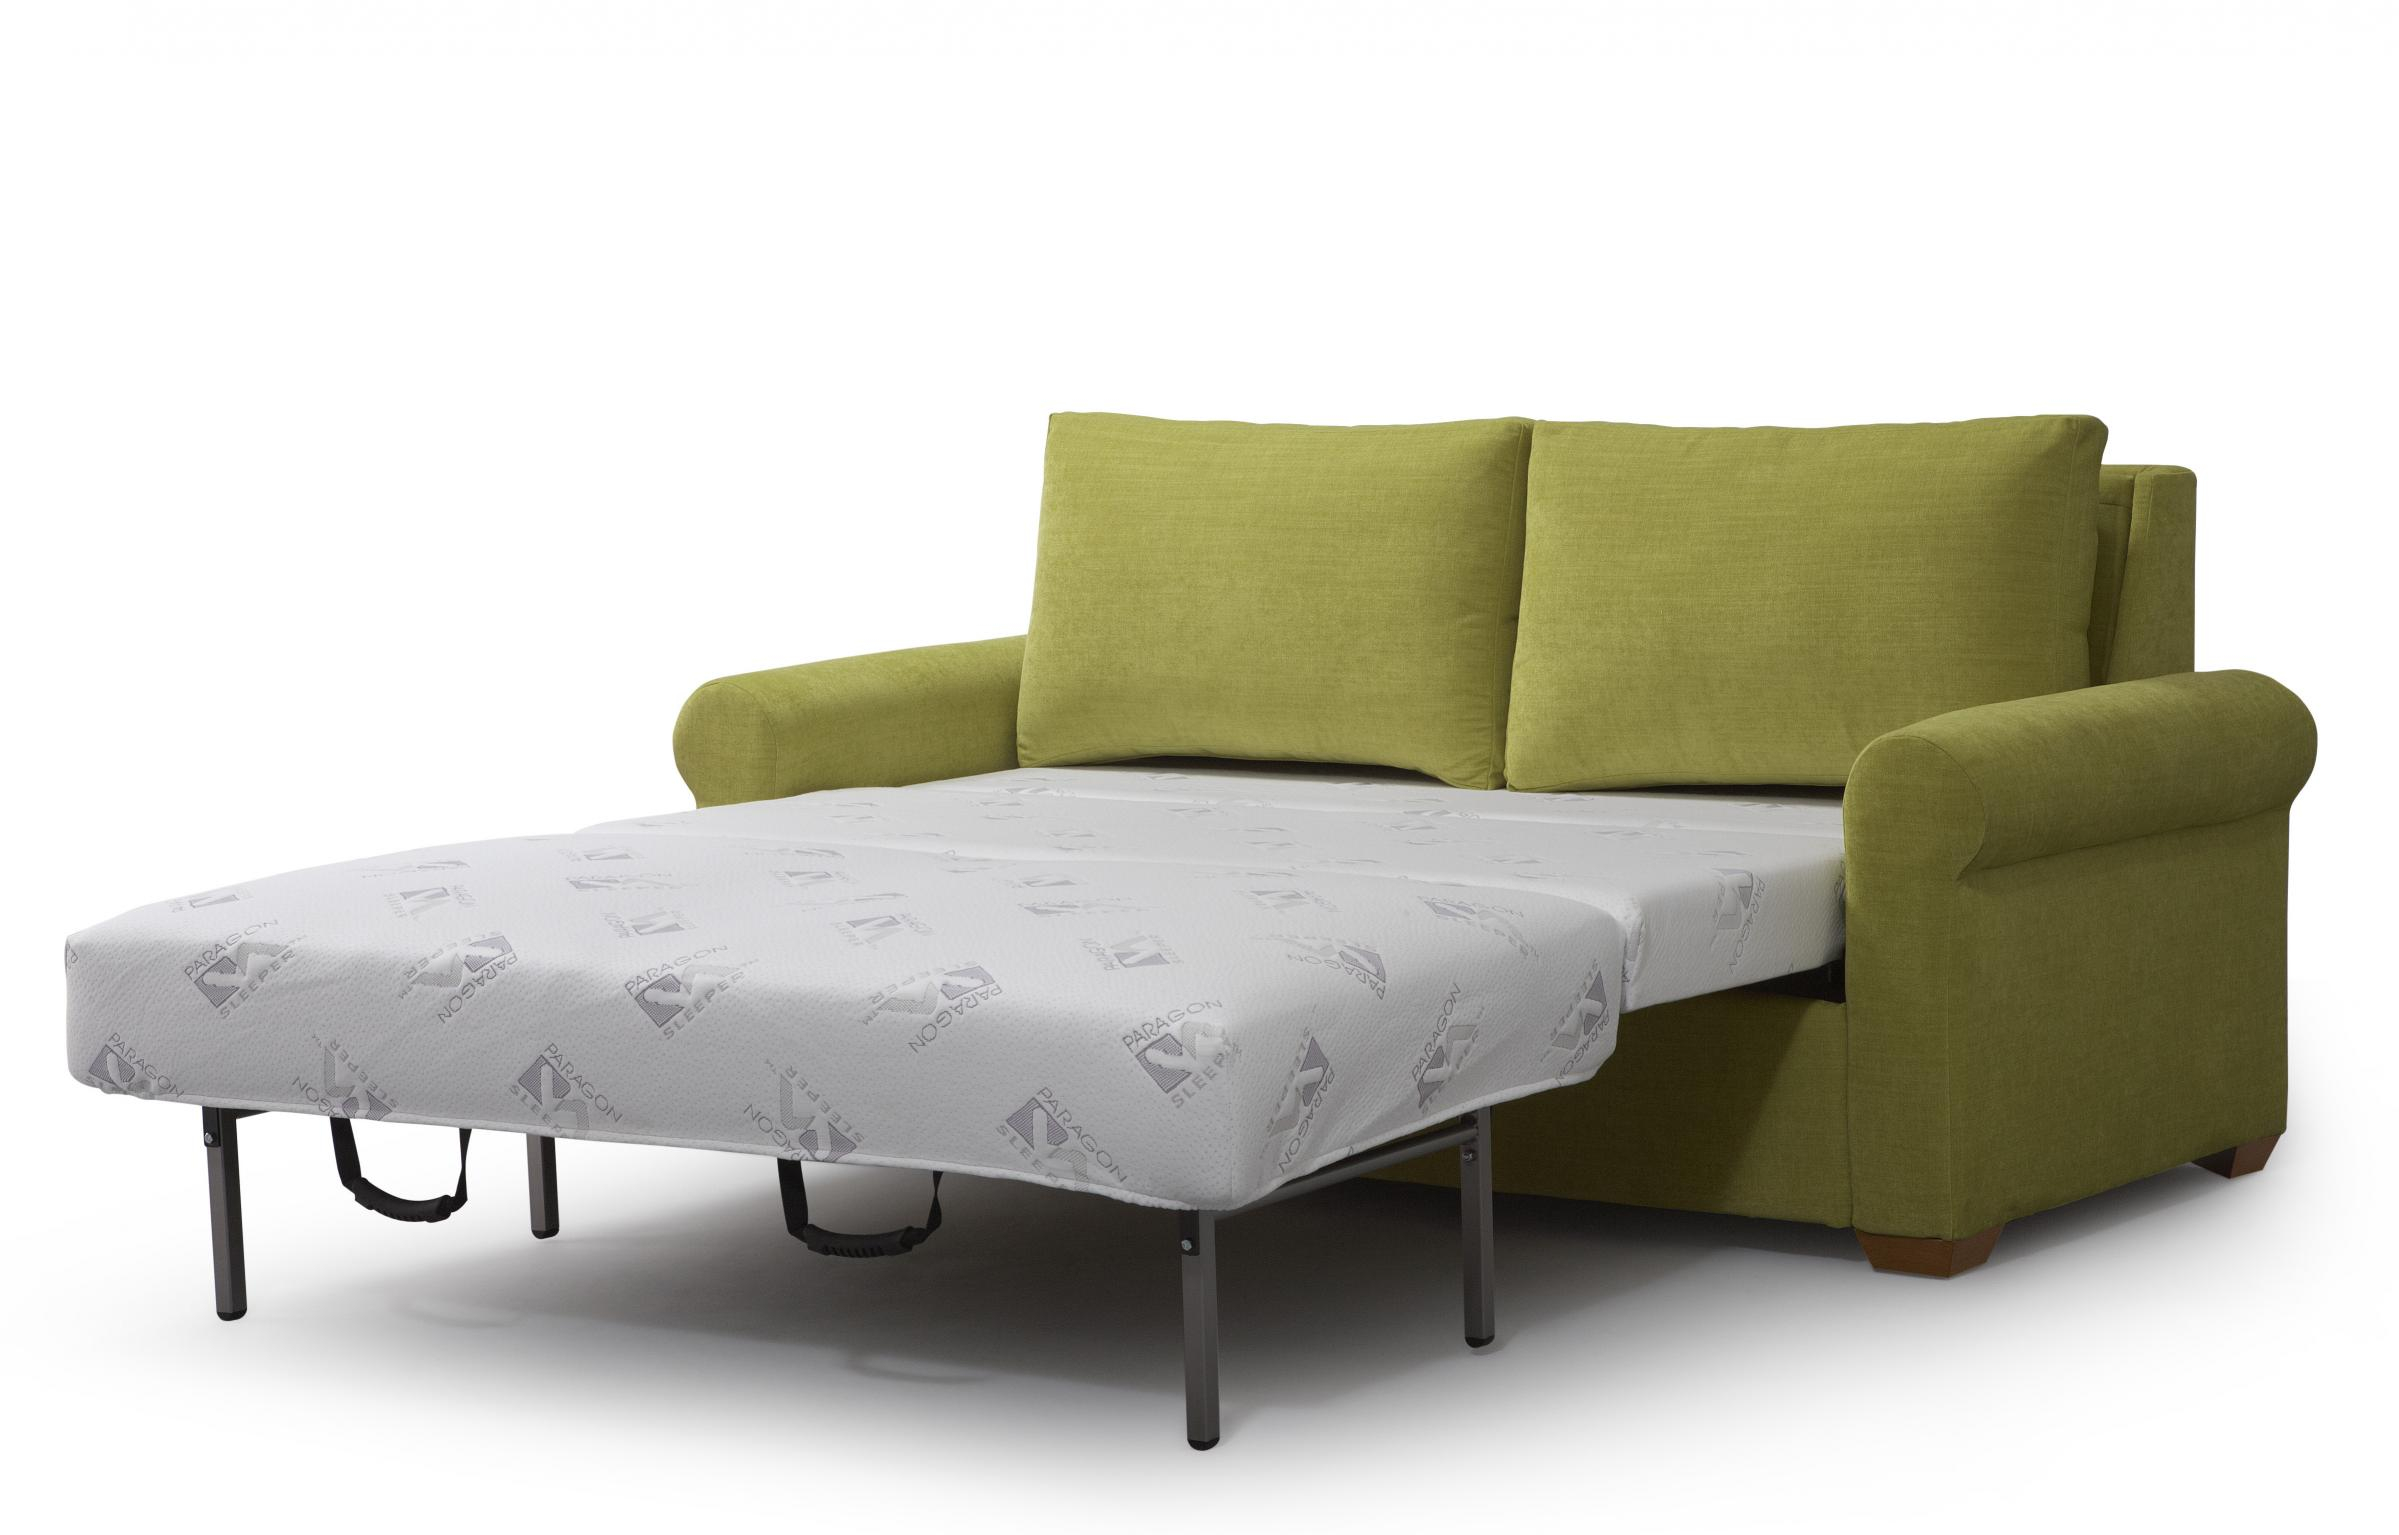 intitle: sleeper sofa mattress topper